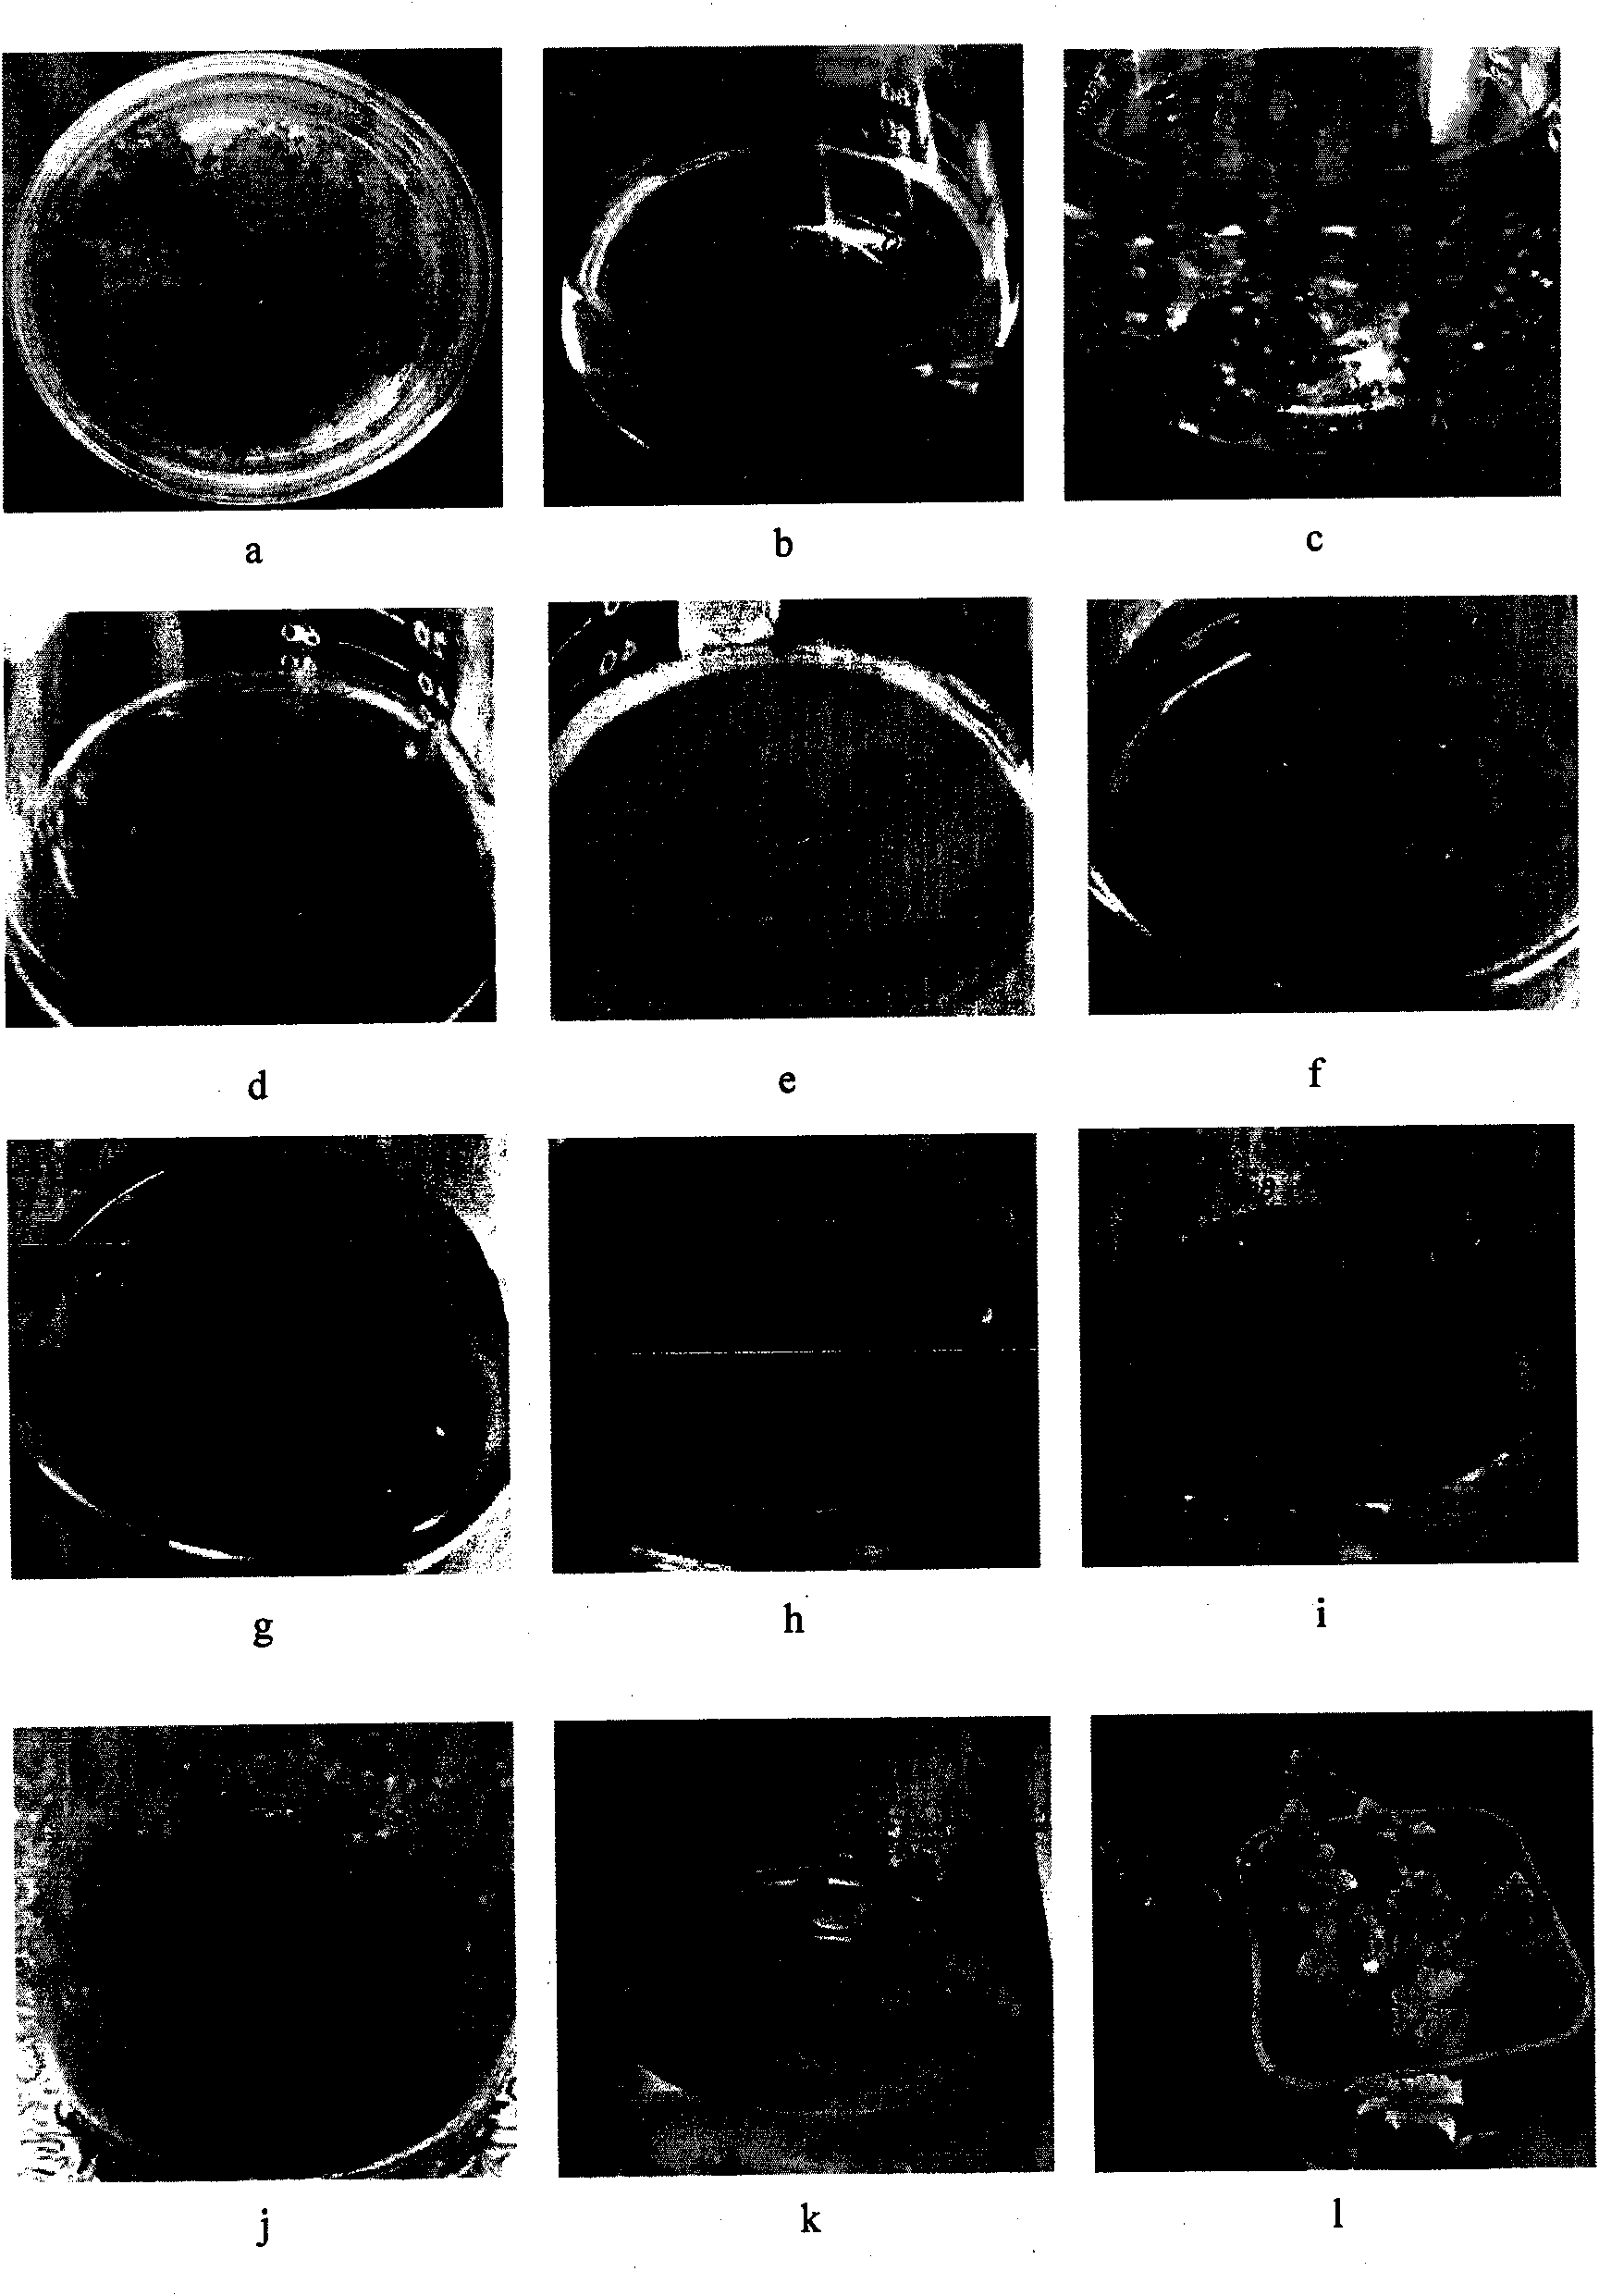 Method of sonatic embryo generation and plant regeneration of aleuritopteris argentea